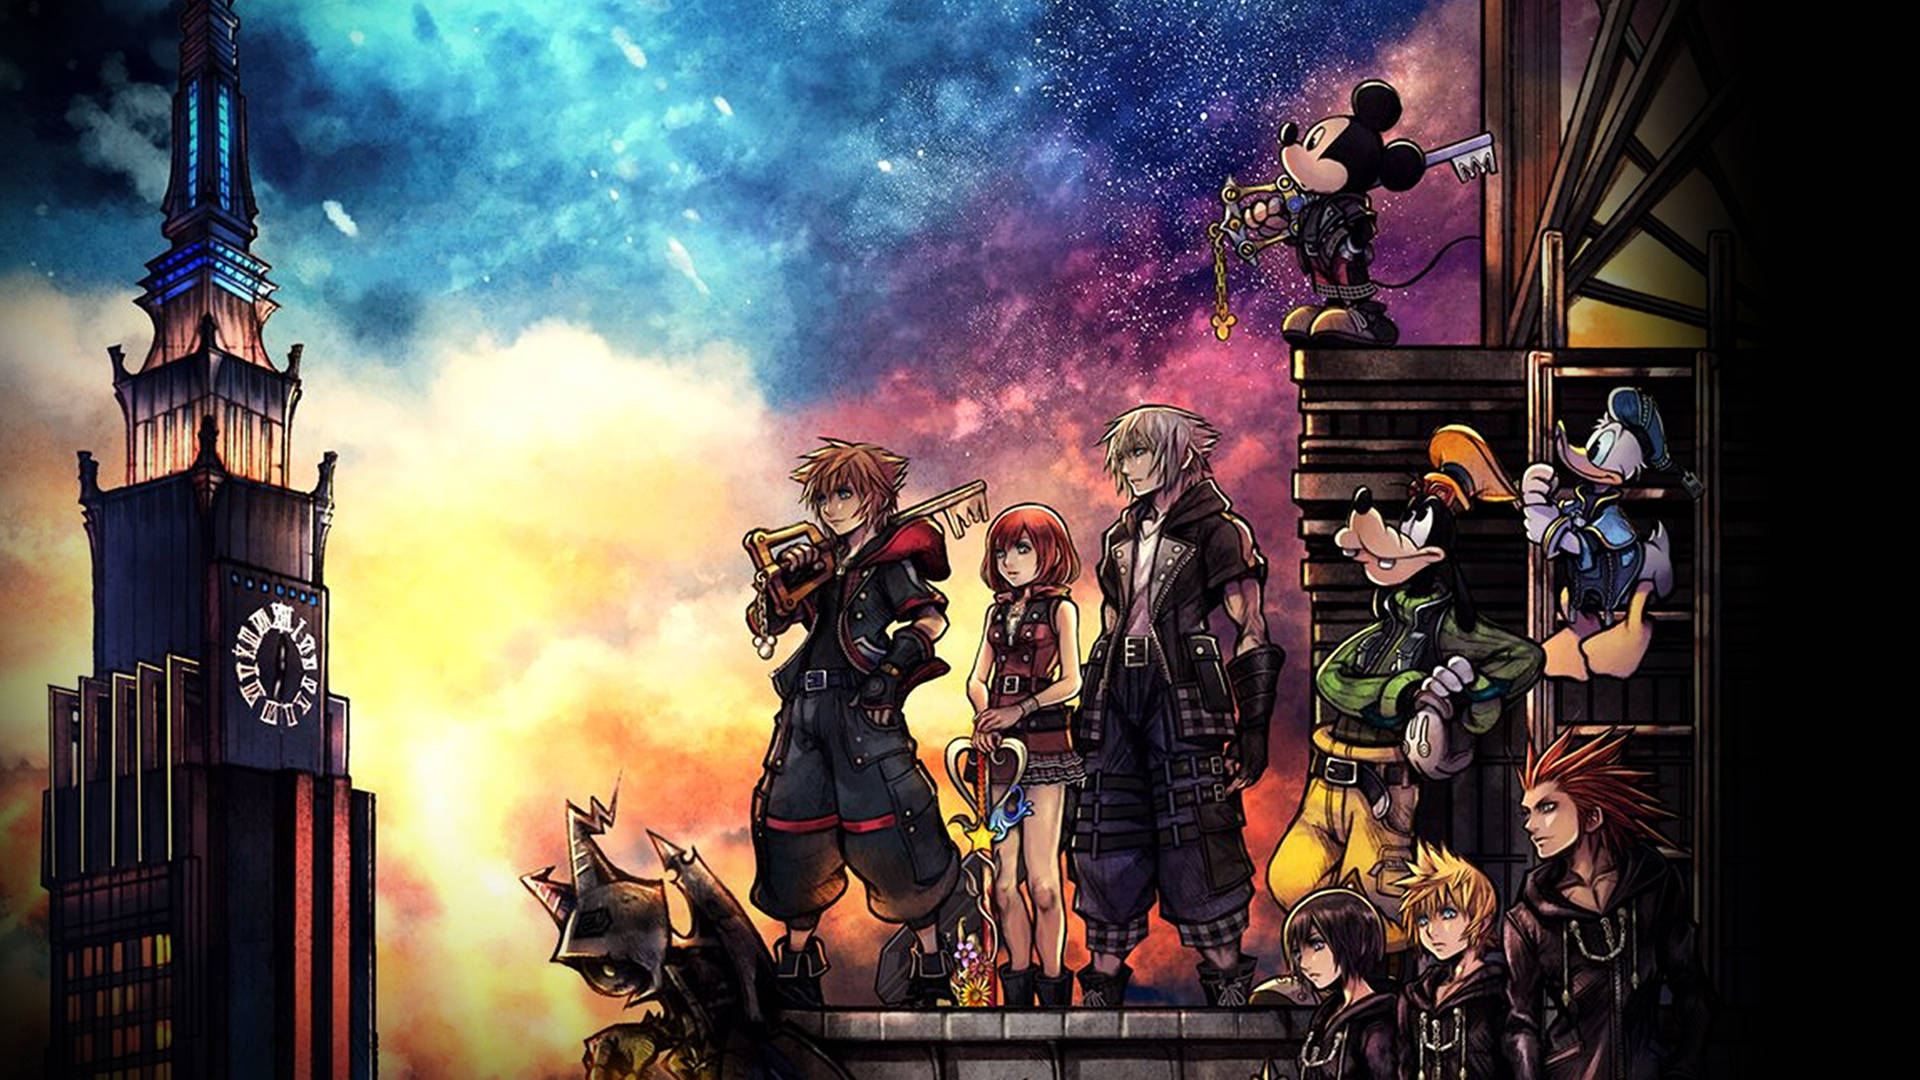 Free Kingdom Hearts 3 Wallpaper Downloads, [100+] Kingdom Hearts 3  Wallpapers for FREE 